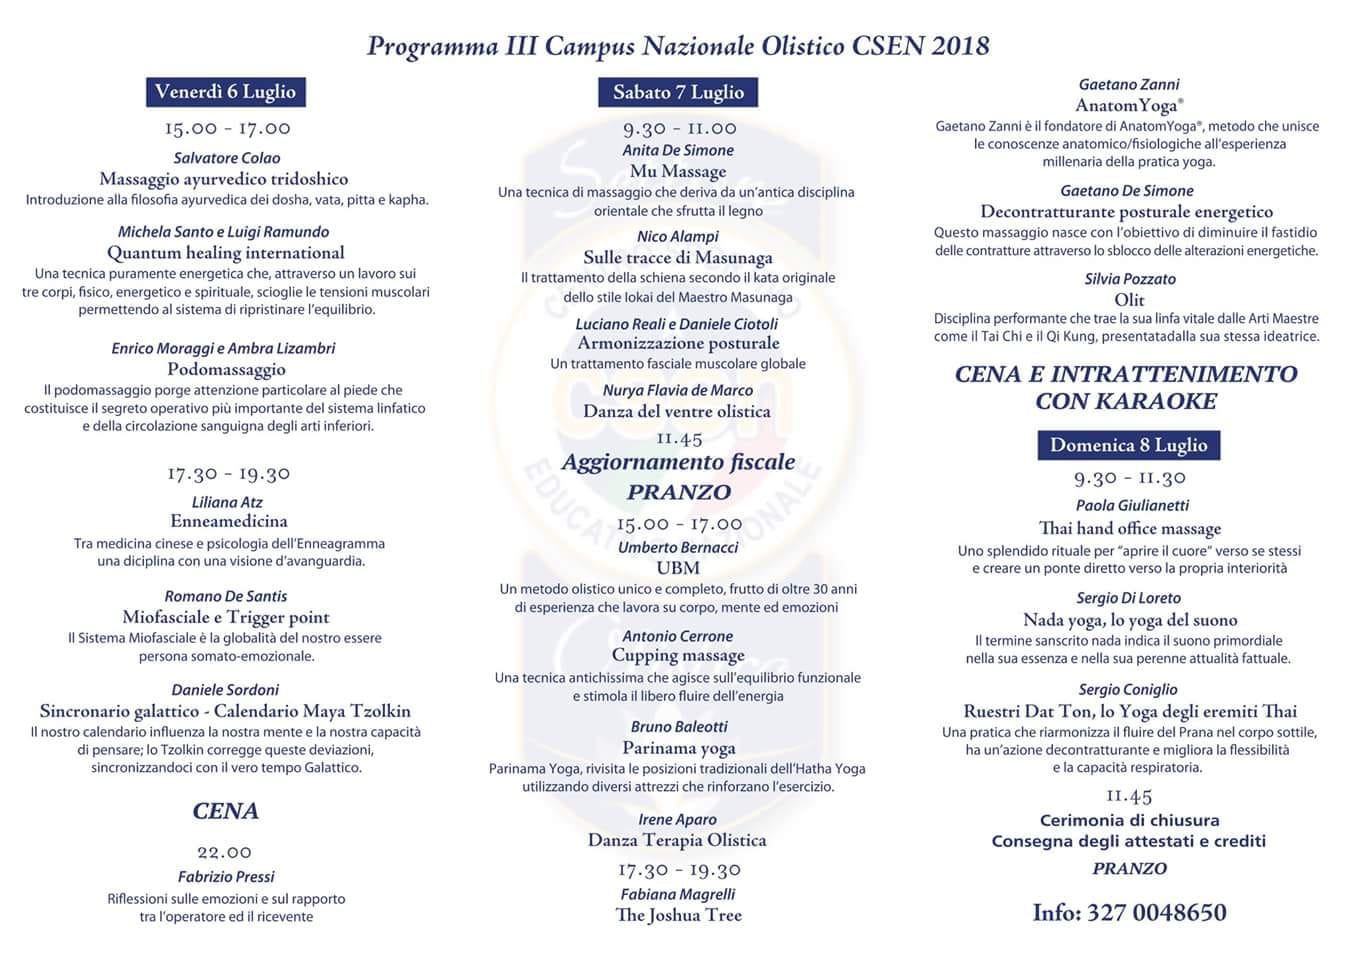 Programma Campus 2018 Nazionale CSEN